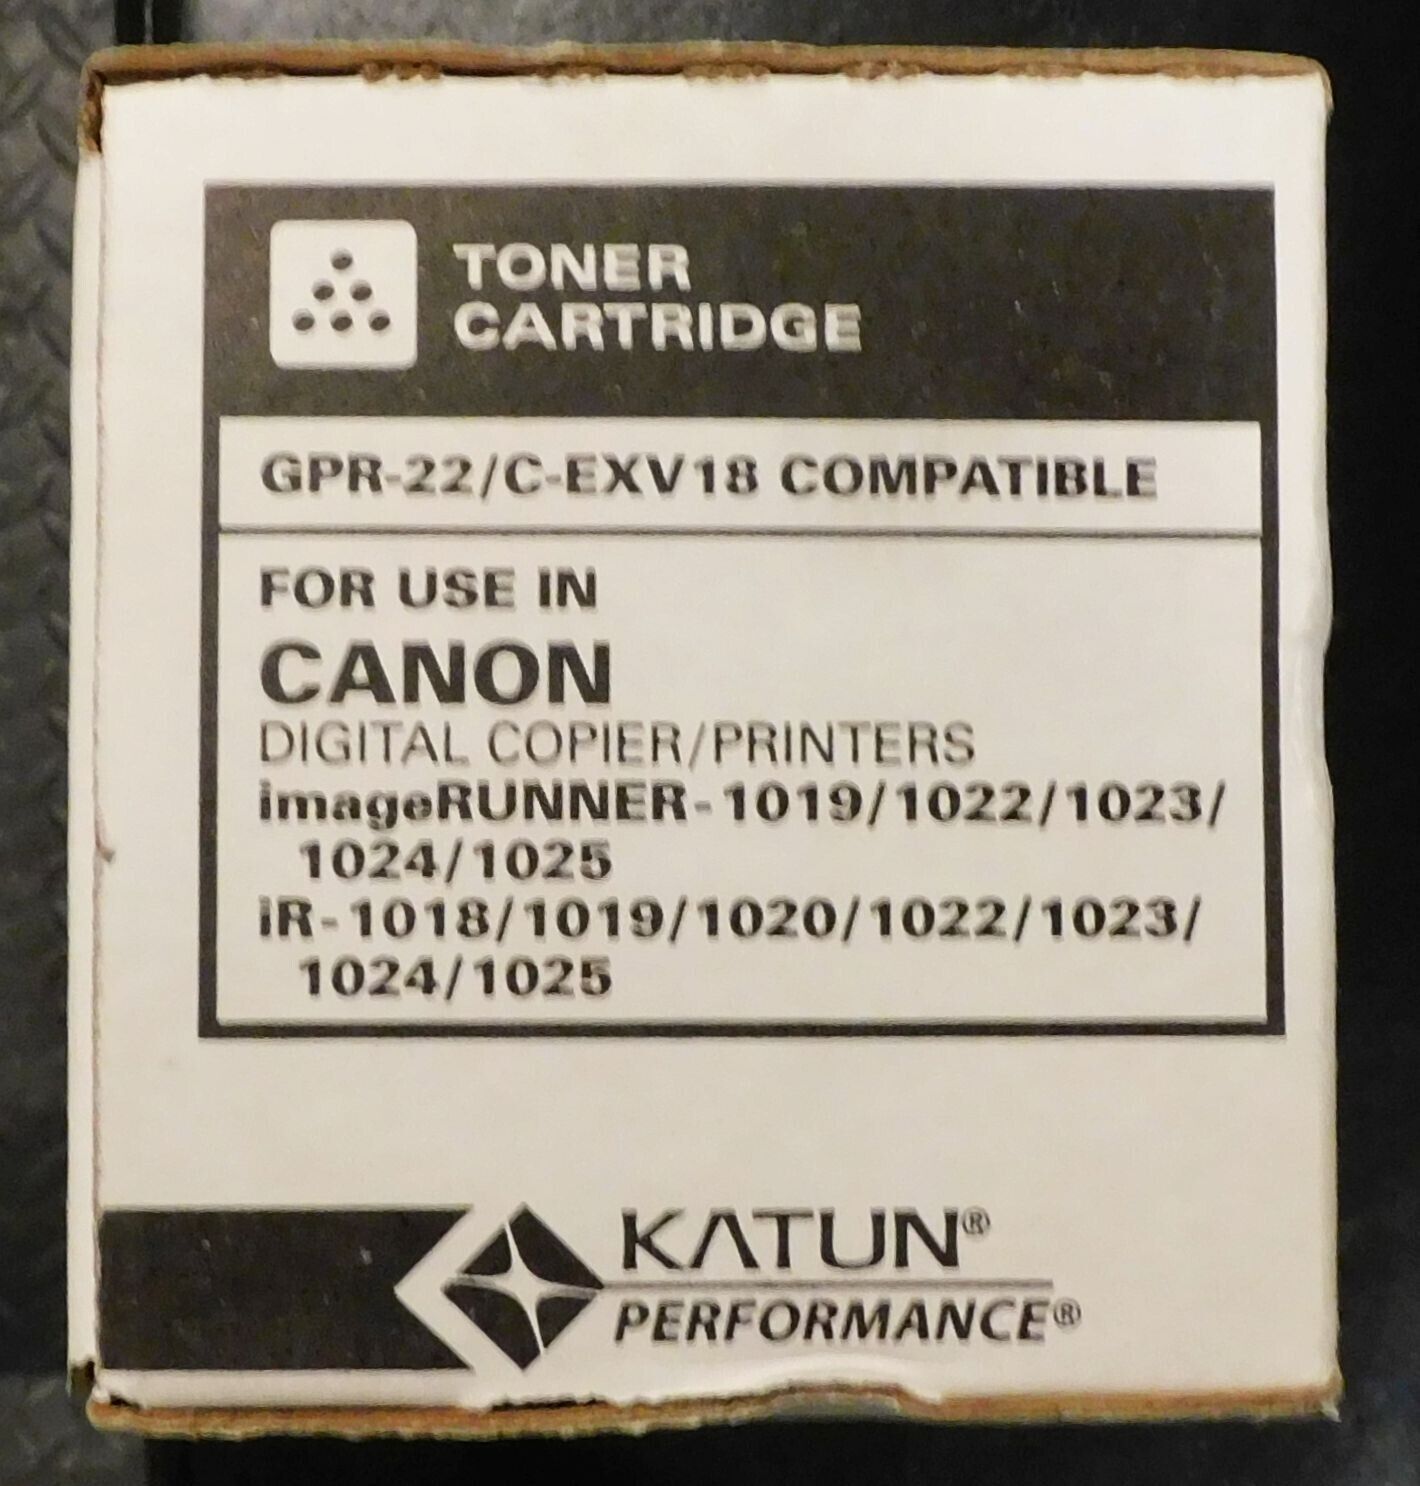 Katun 32600 for Canon GPR-22/C-EXV18 Toner Cartridge for Digital Copier/Printers